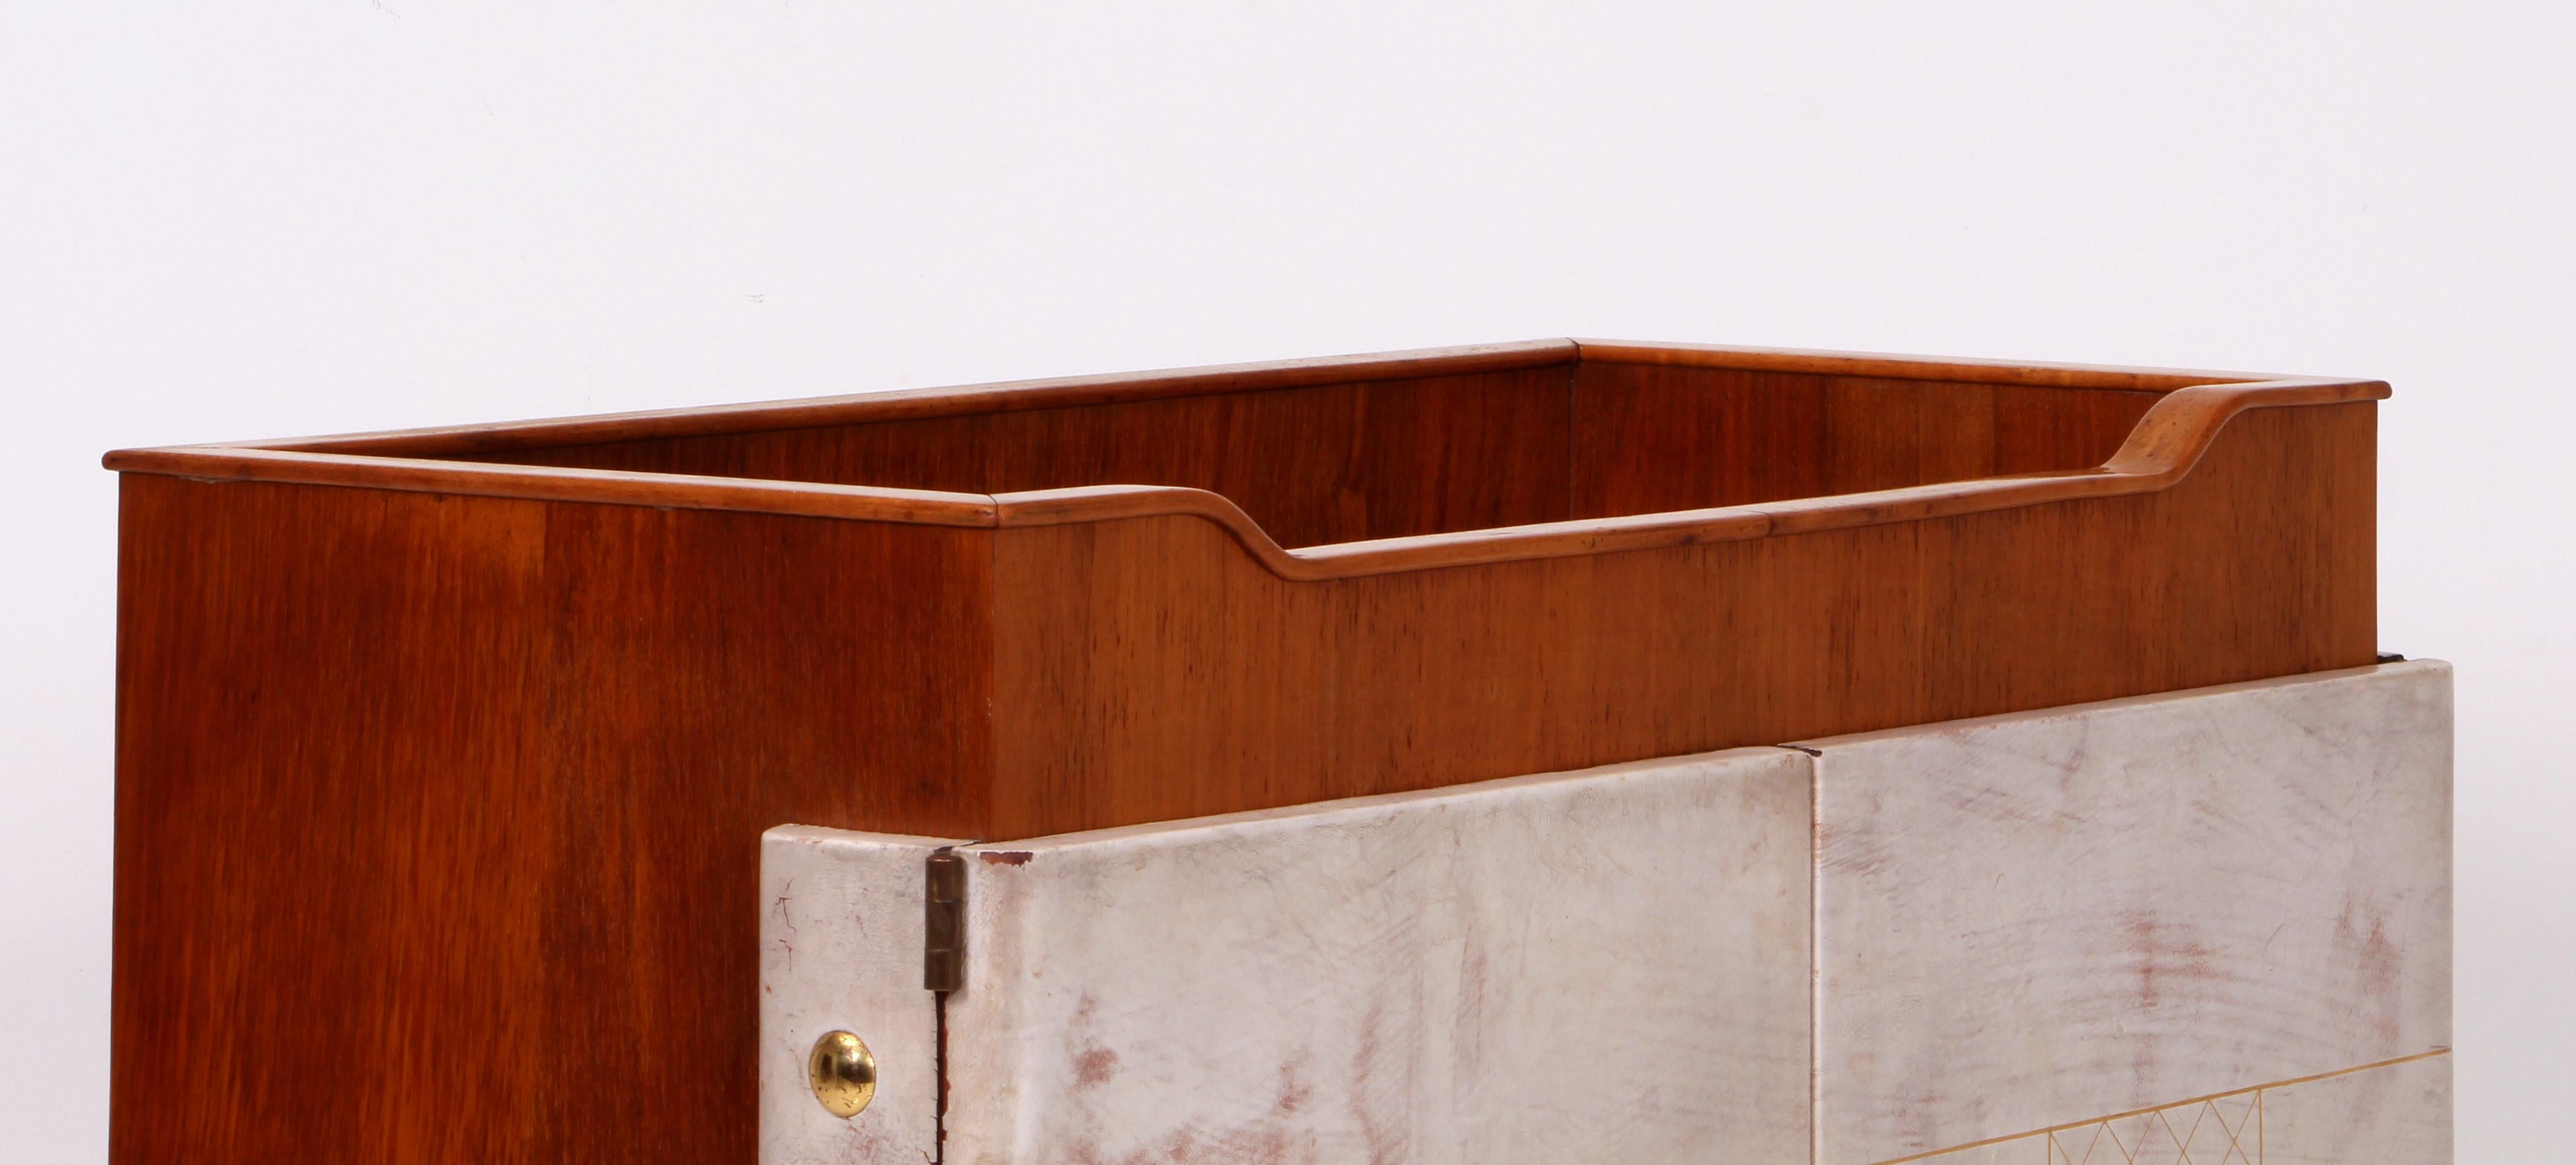 Rare László Hoenig London Art Deco Mirrored Drinks Bar Cabinet Leather Maple For Sale 1